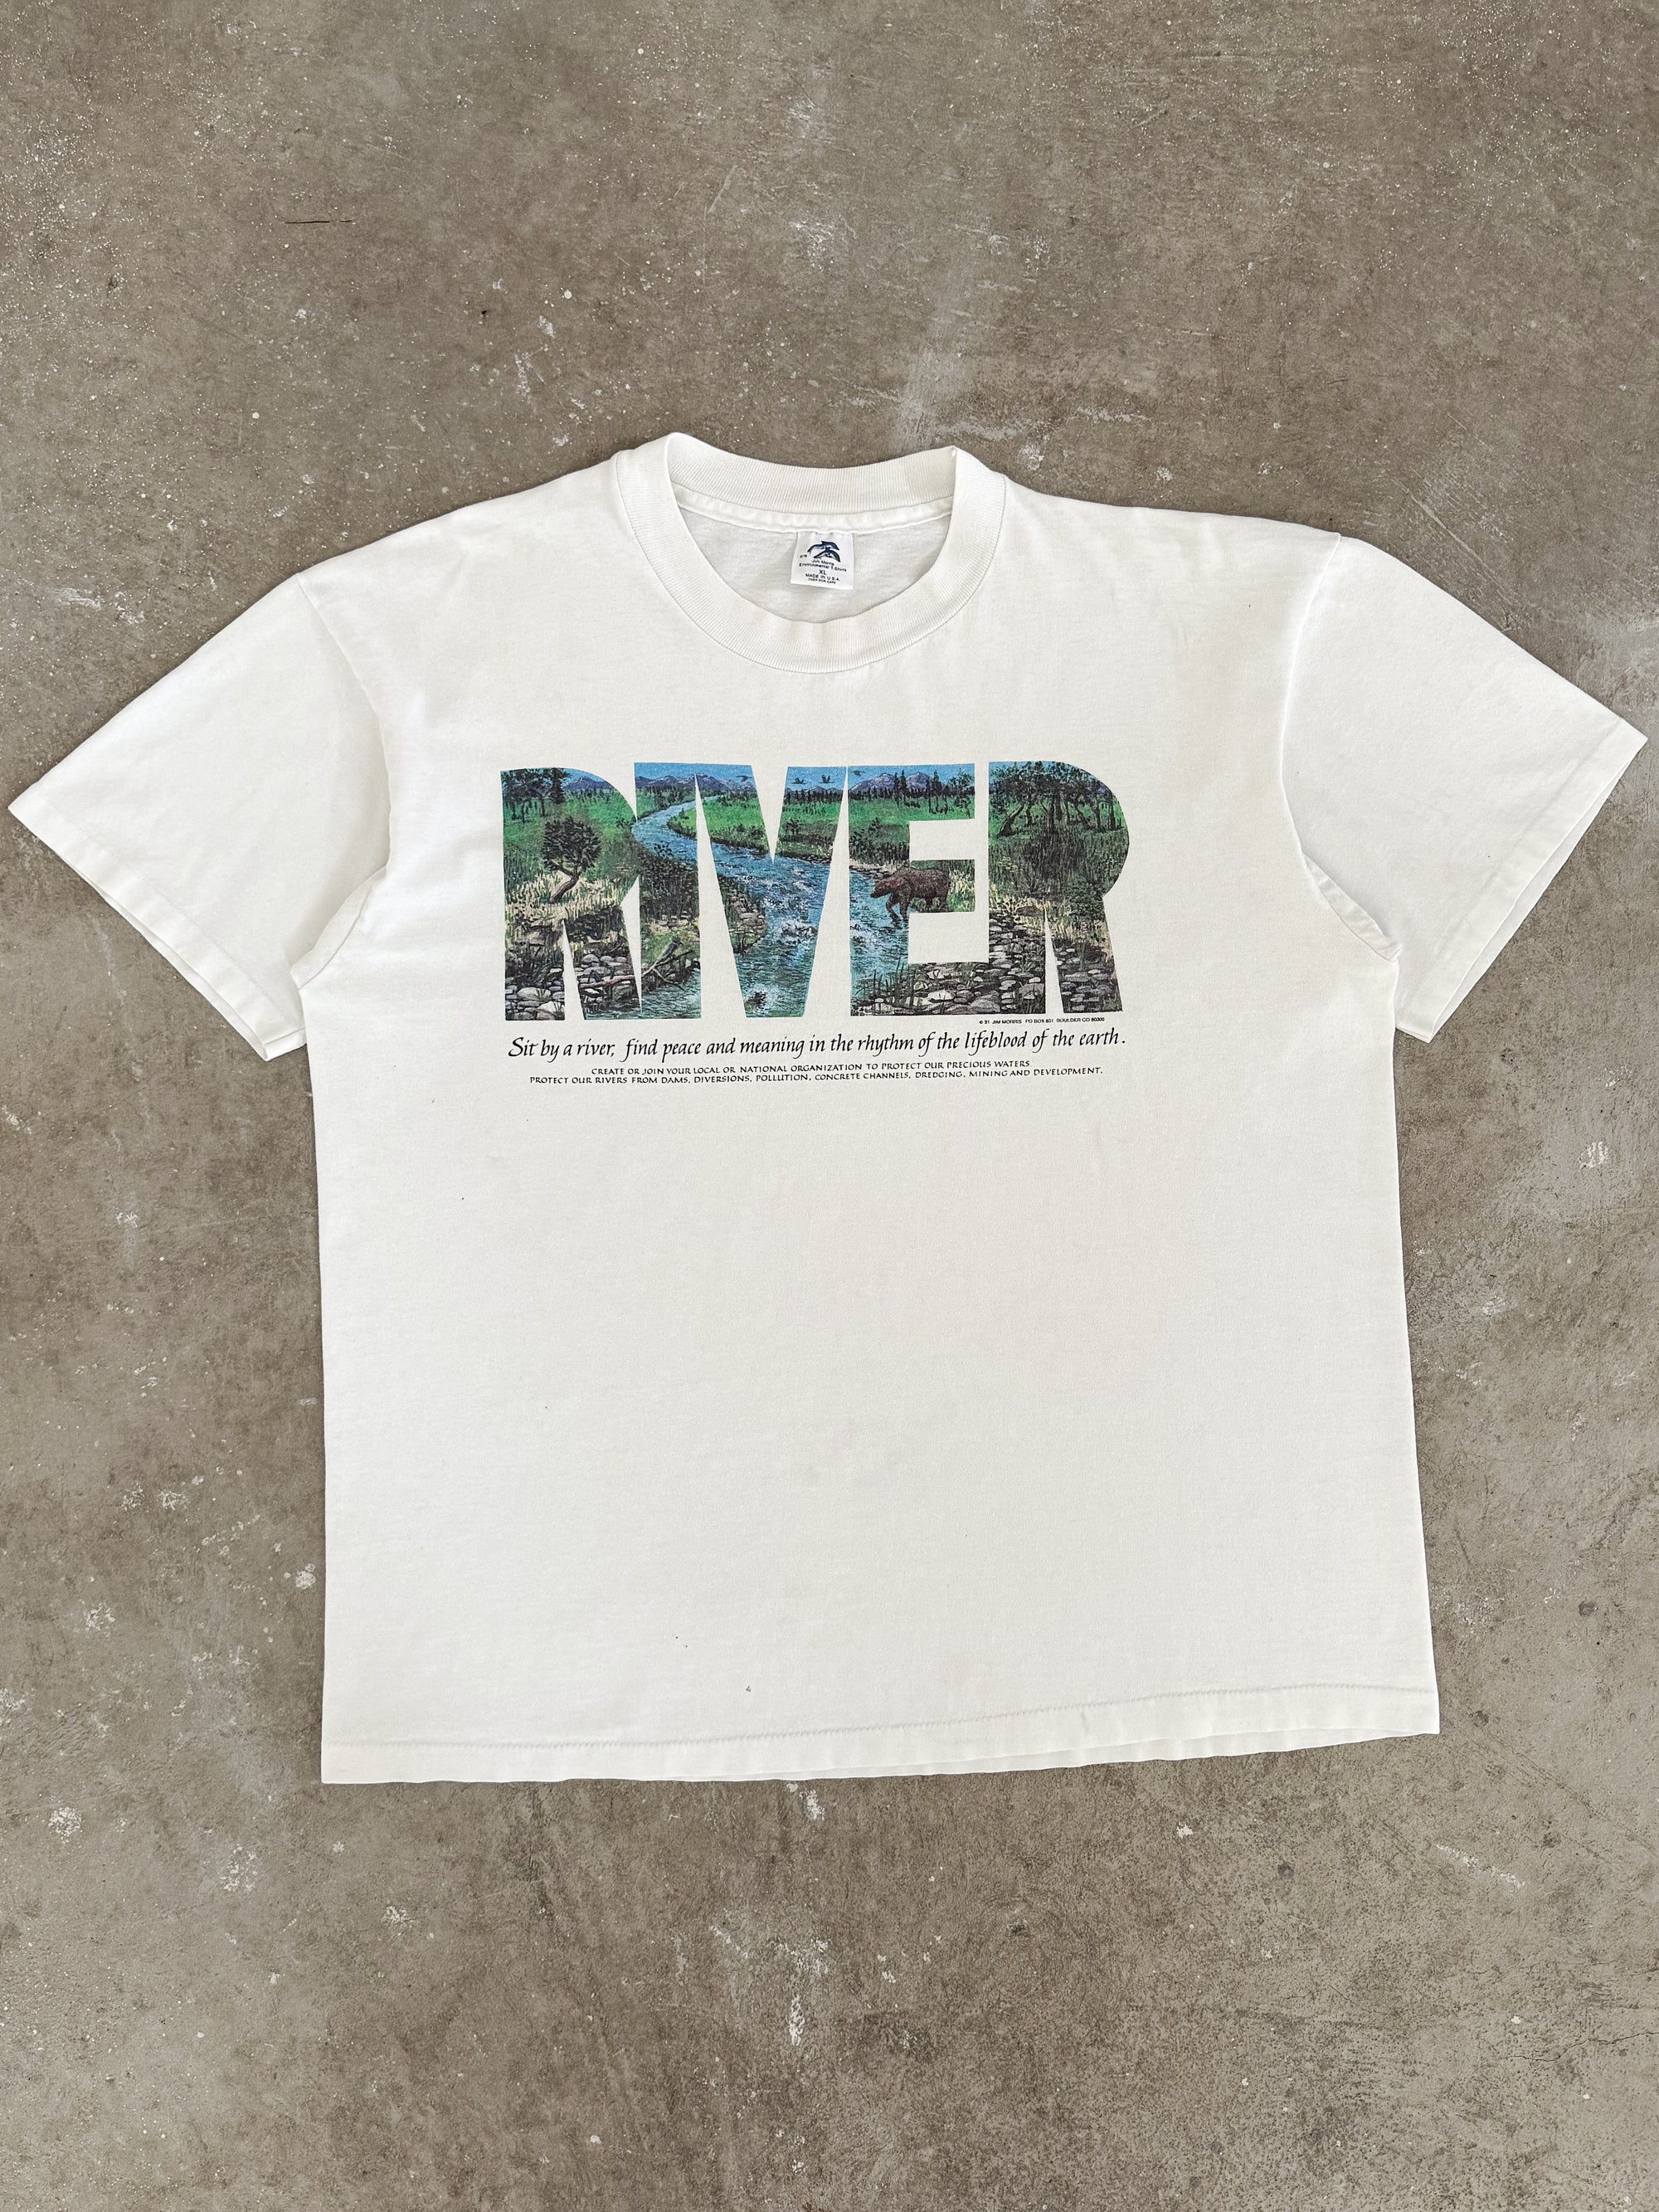 1990s "River" Tee (L/XL)